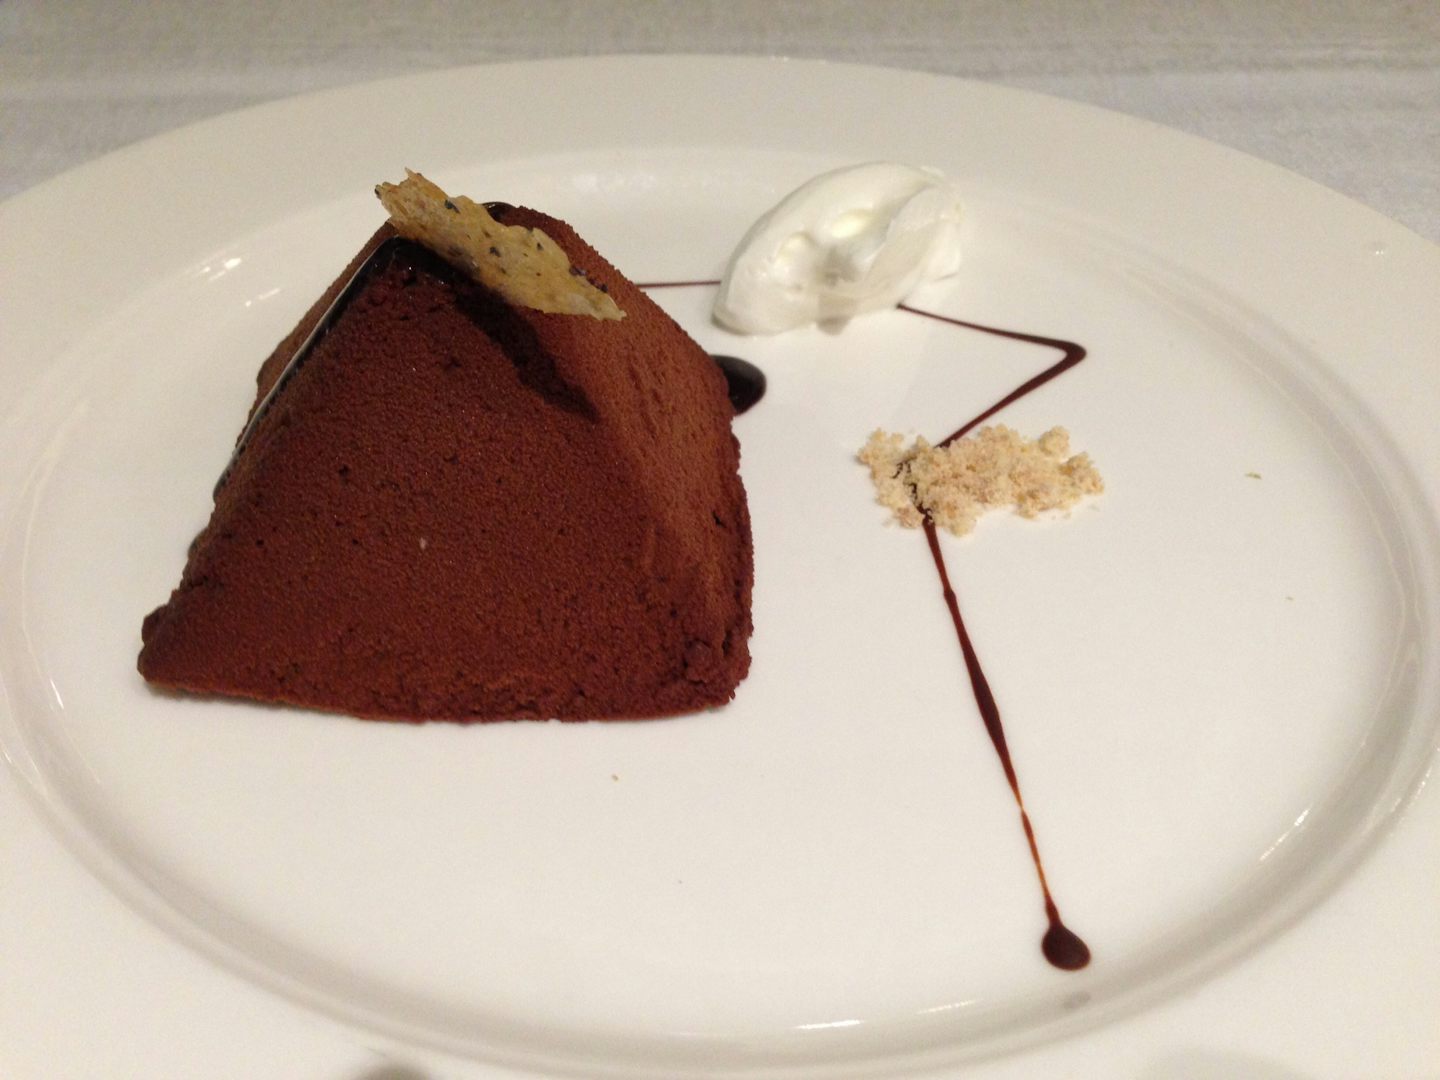 Chocolate dessert at The Restaurant